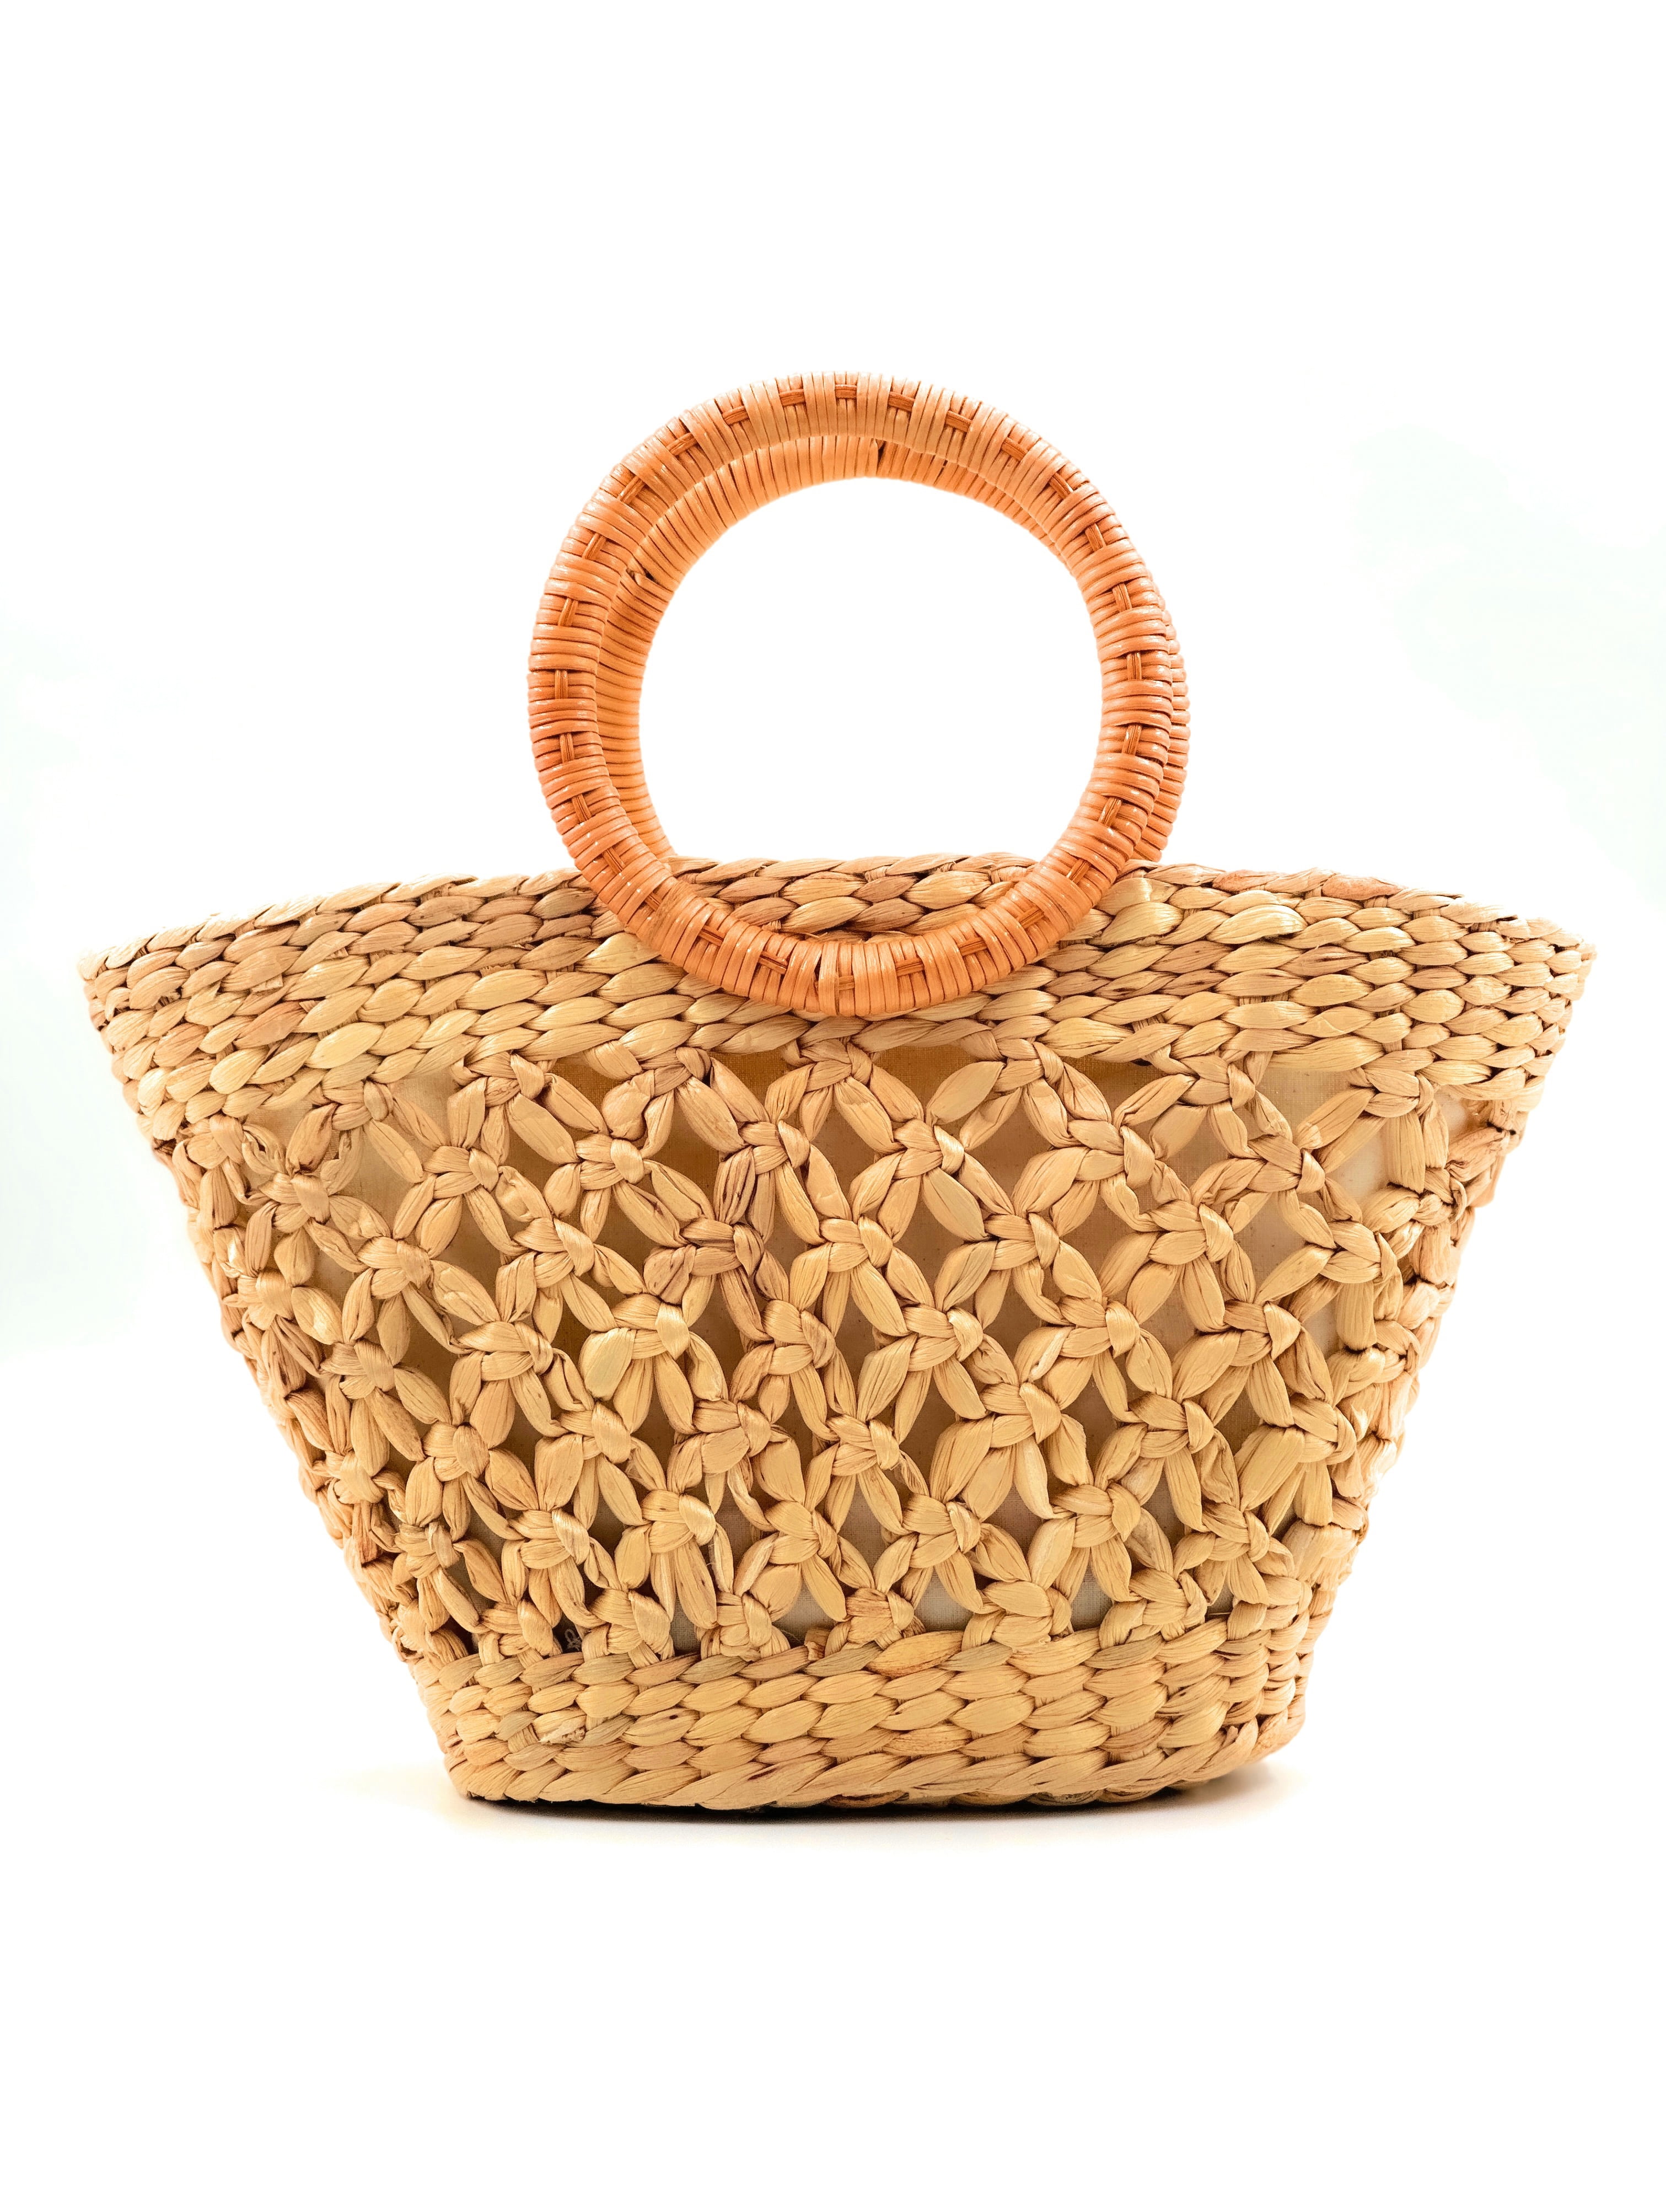 AgnesGP Straw Bag For Women, Crossbody Beach Woven Purse, Handmade Rattan  Purse For Summer